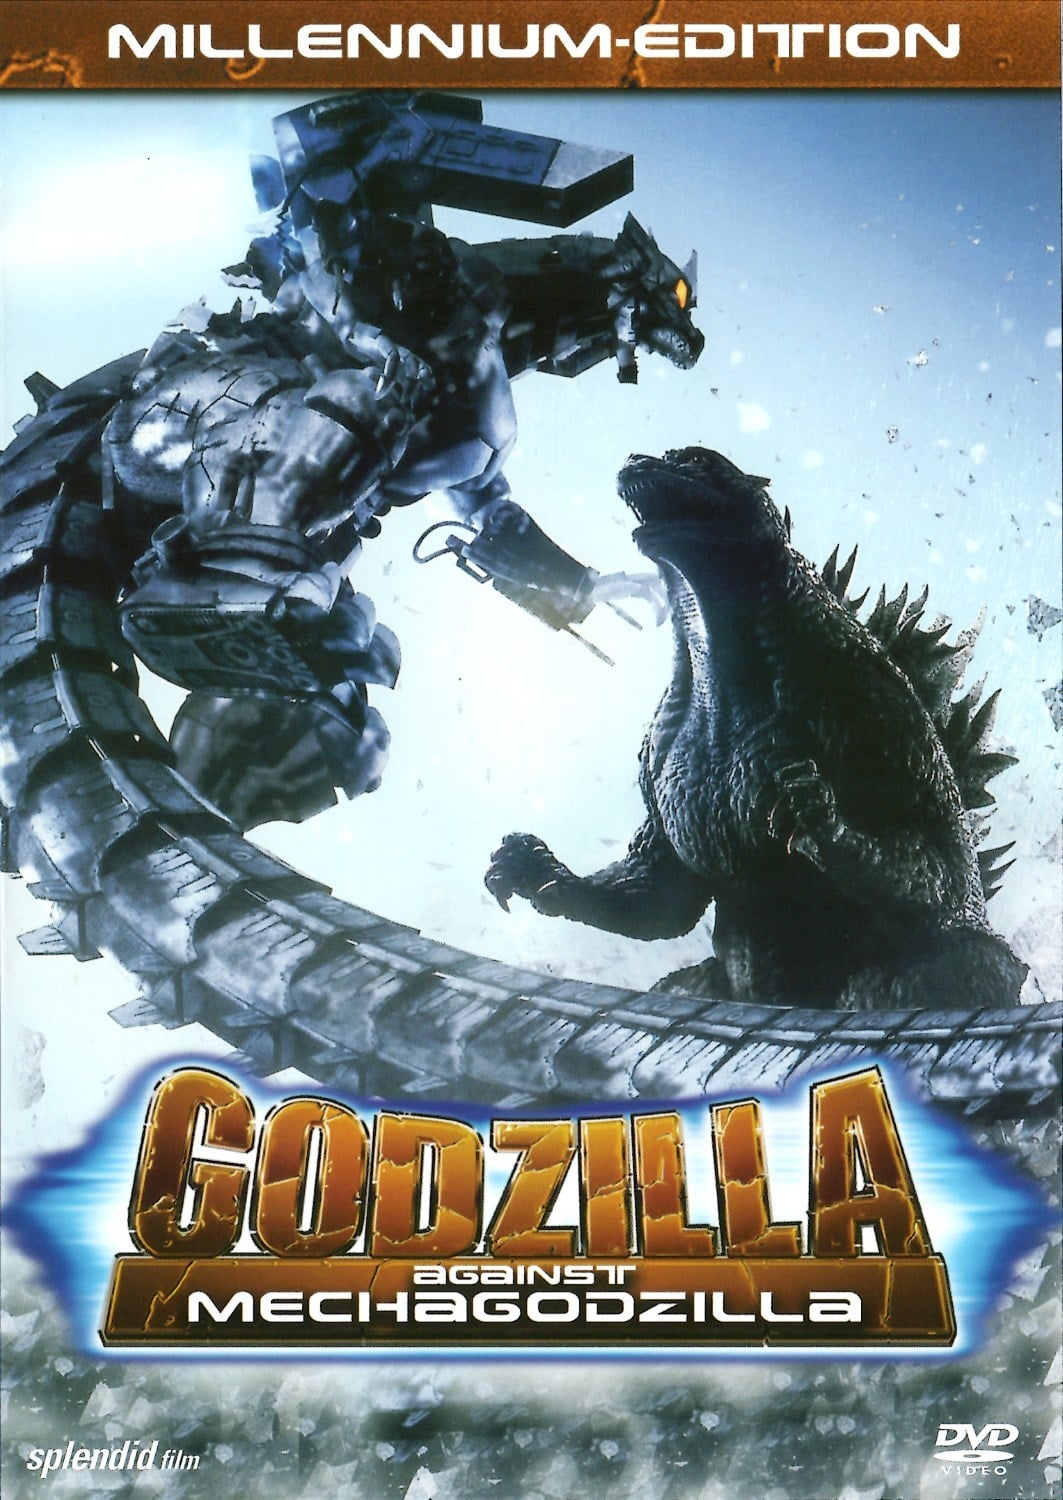 Plakat von "Godzilla gegen Mechagodzilla"